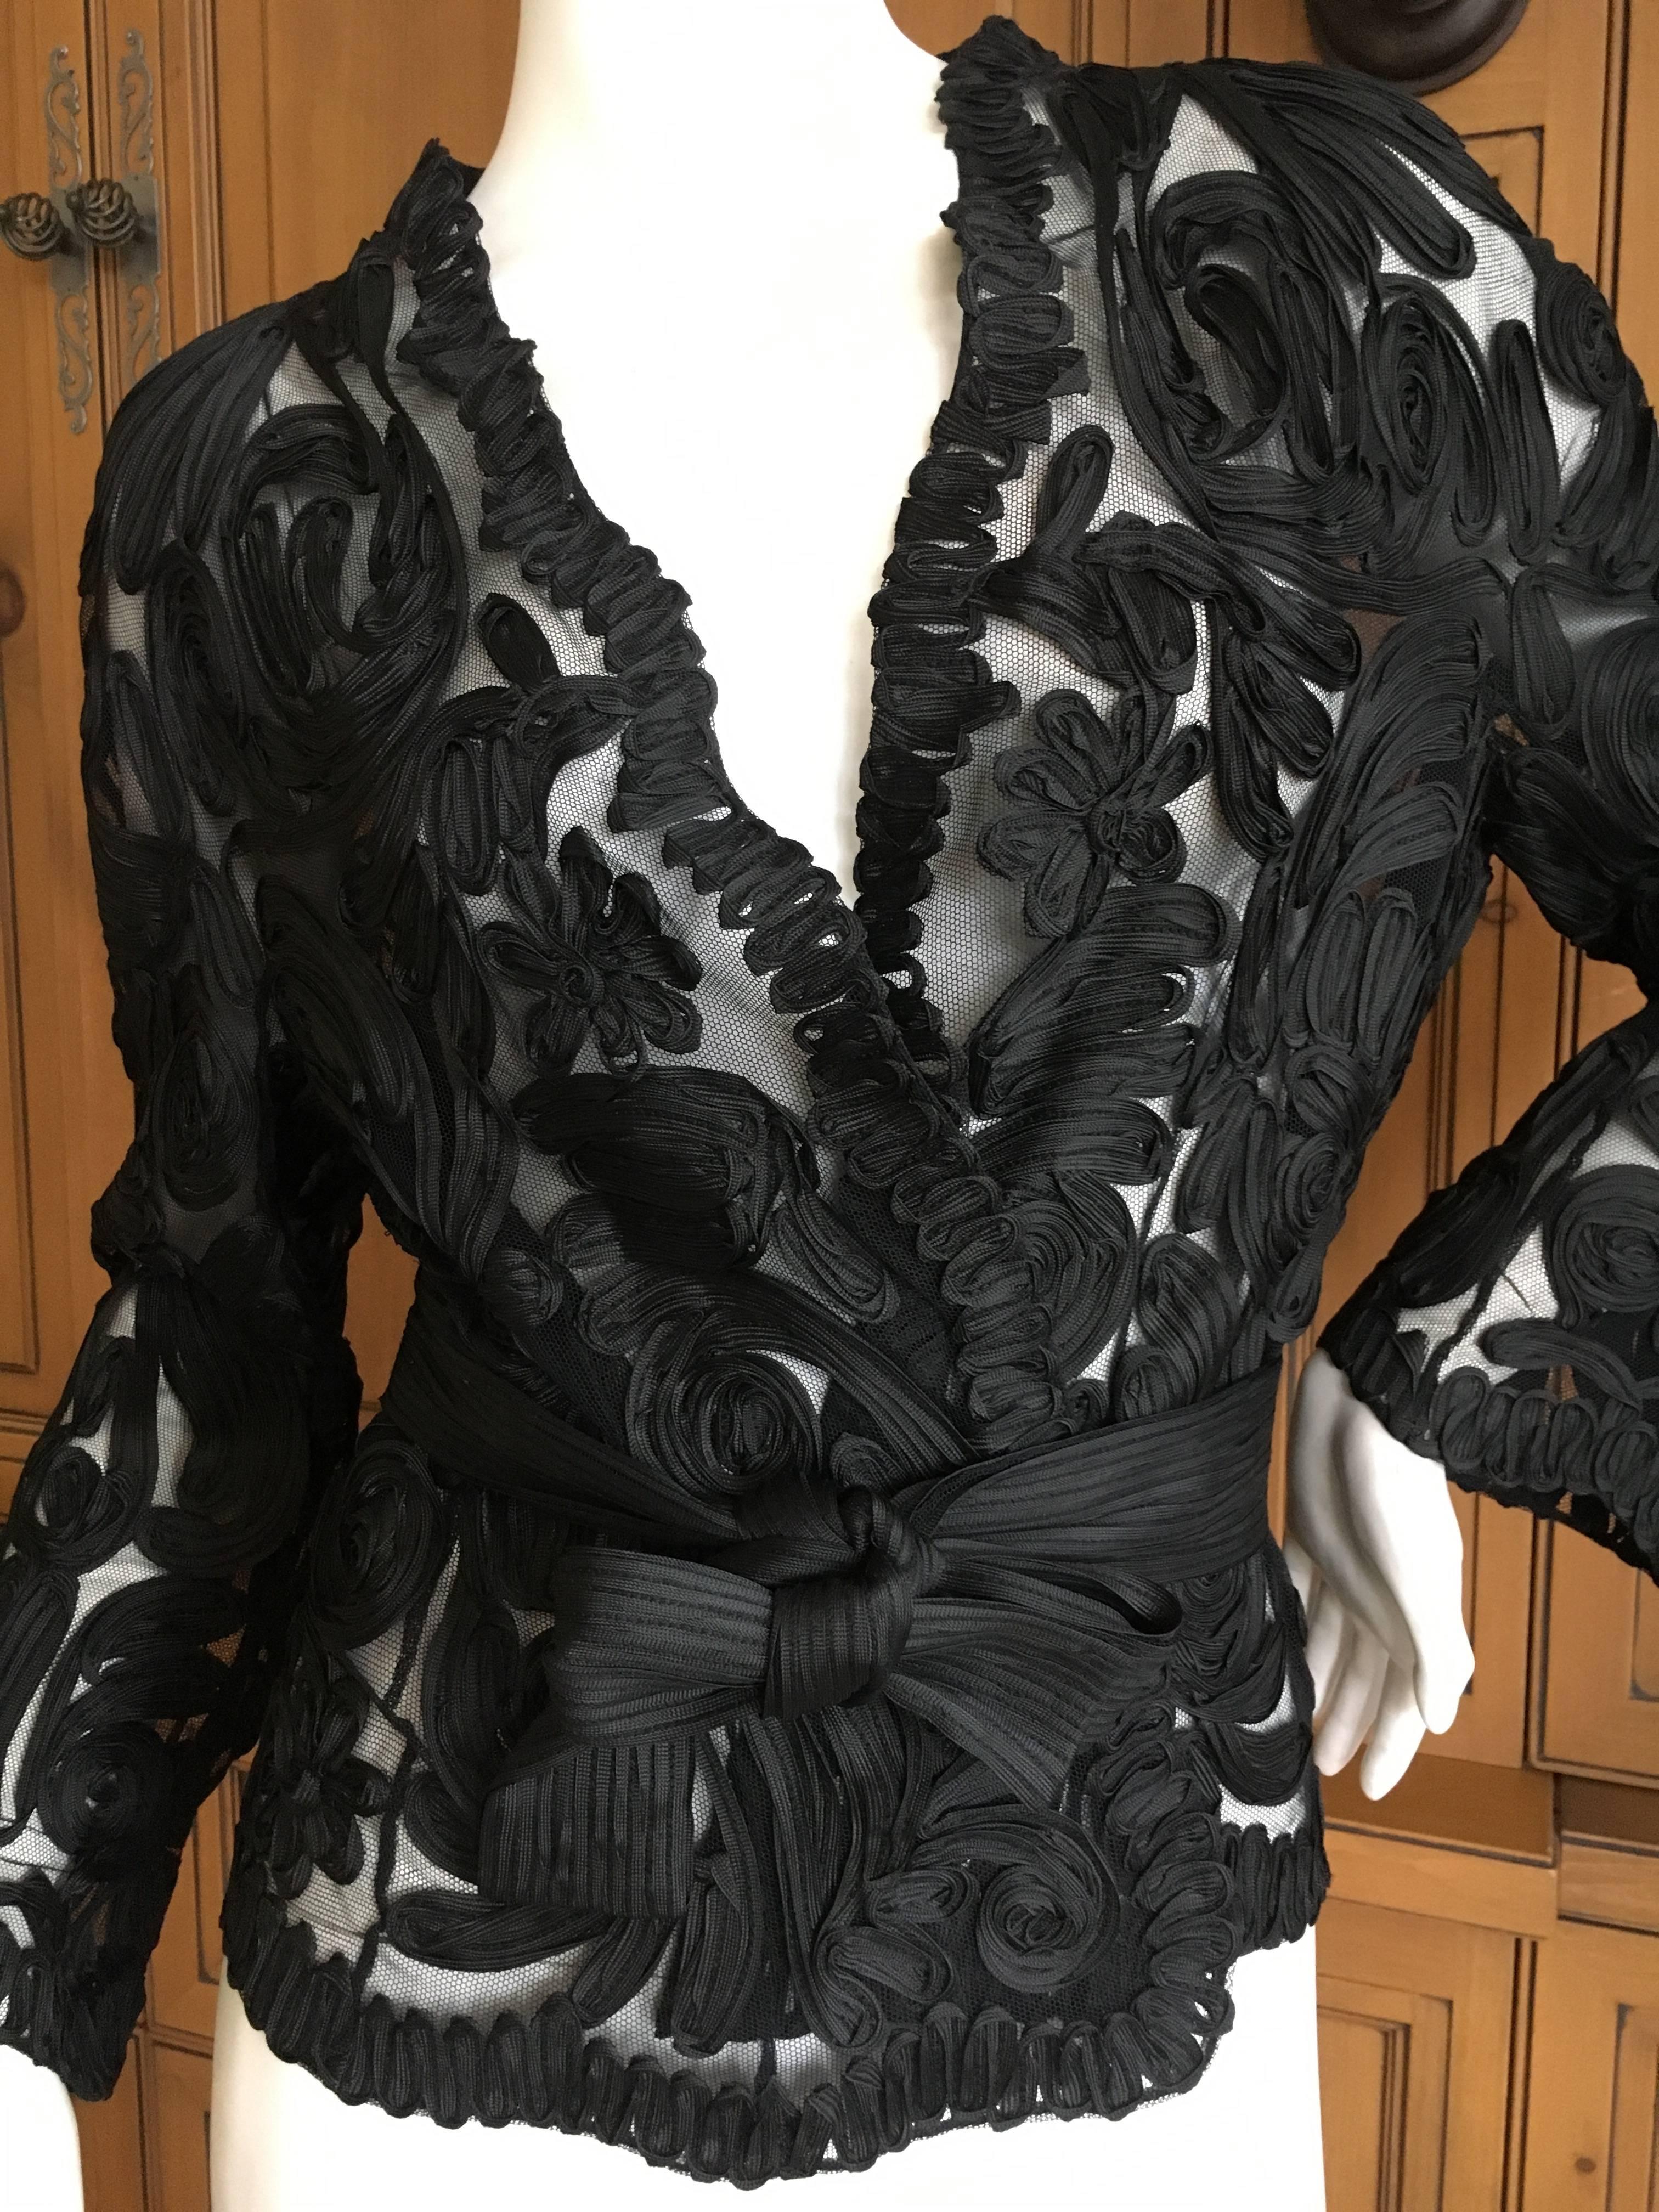 Women's Christian Dior by John Galliano Sheer Black Jacket with Soutache Details